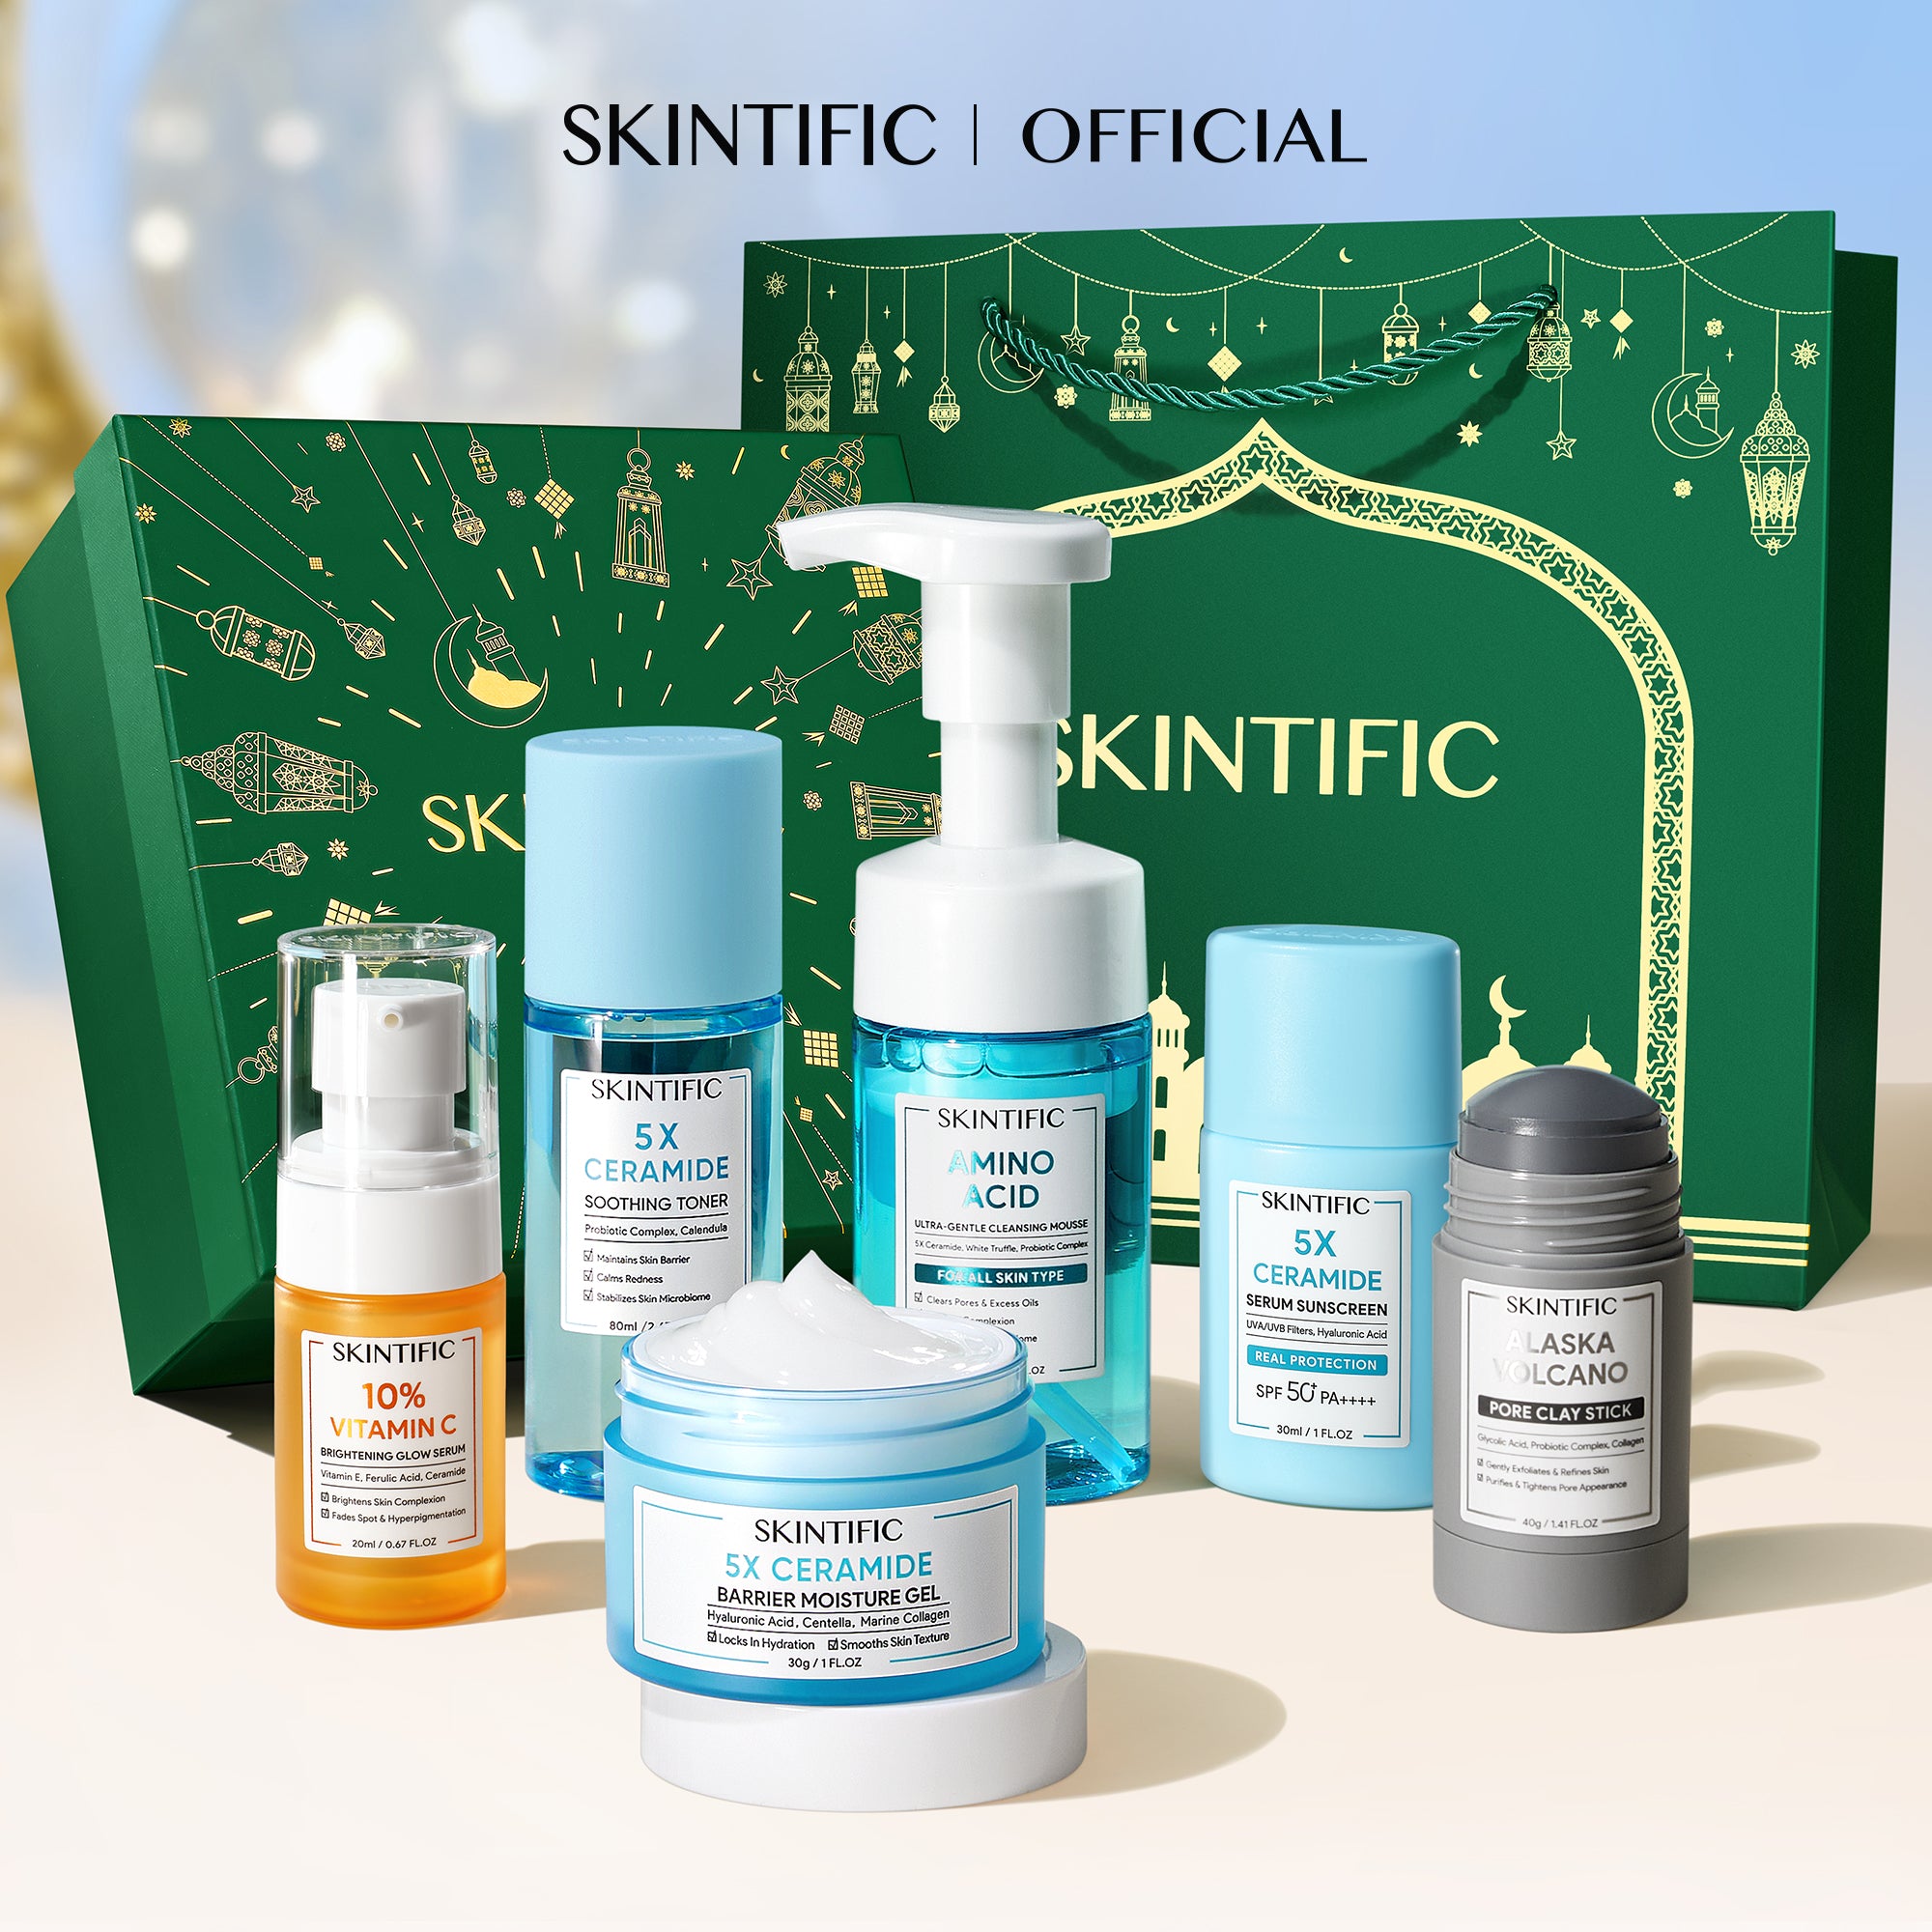 [Parcel Lebaran] SKINTIFIC Paket 6pcs Set moisturizer + Sunscreen + Serum + Clay Mask Stick + Facial Cleanser + Toner + Mask Bundle